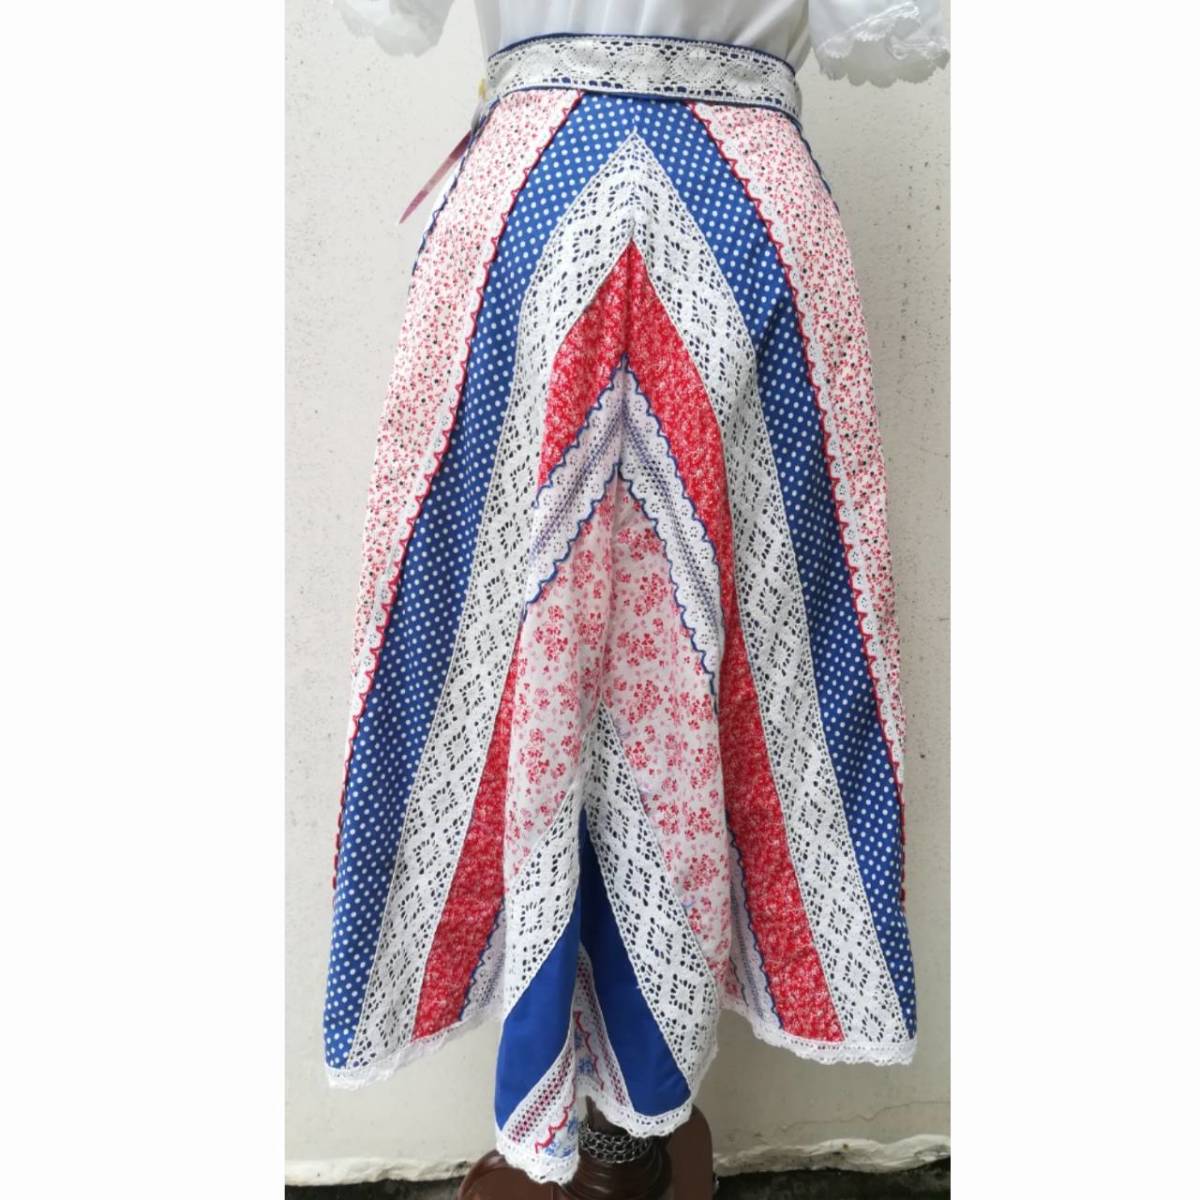  Europe old clothes 1970s patchwork skirt small floral print dot pattern cotton skirt skirt flair skirt frill Cart LV227